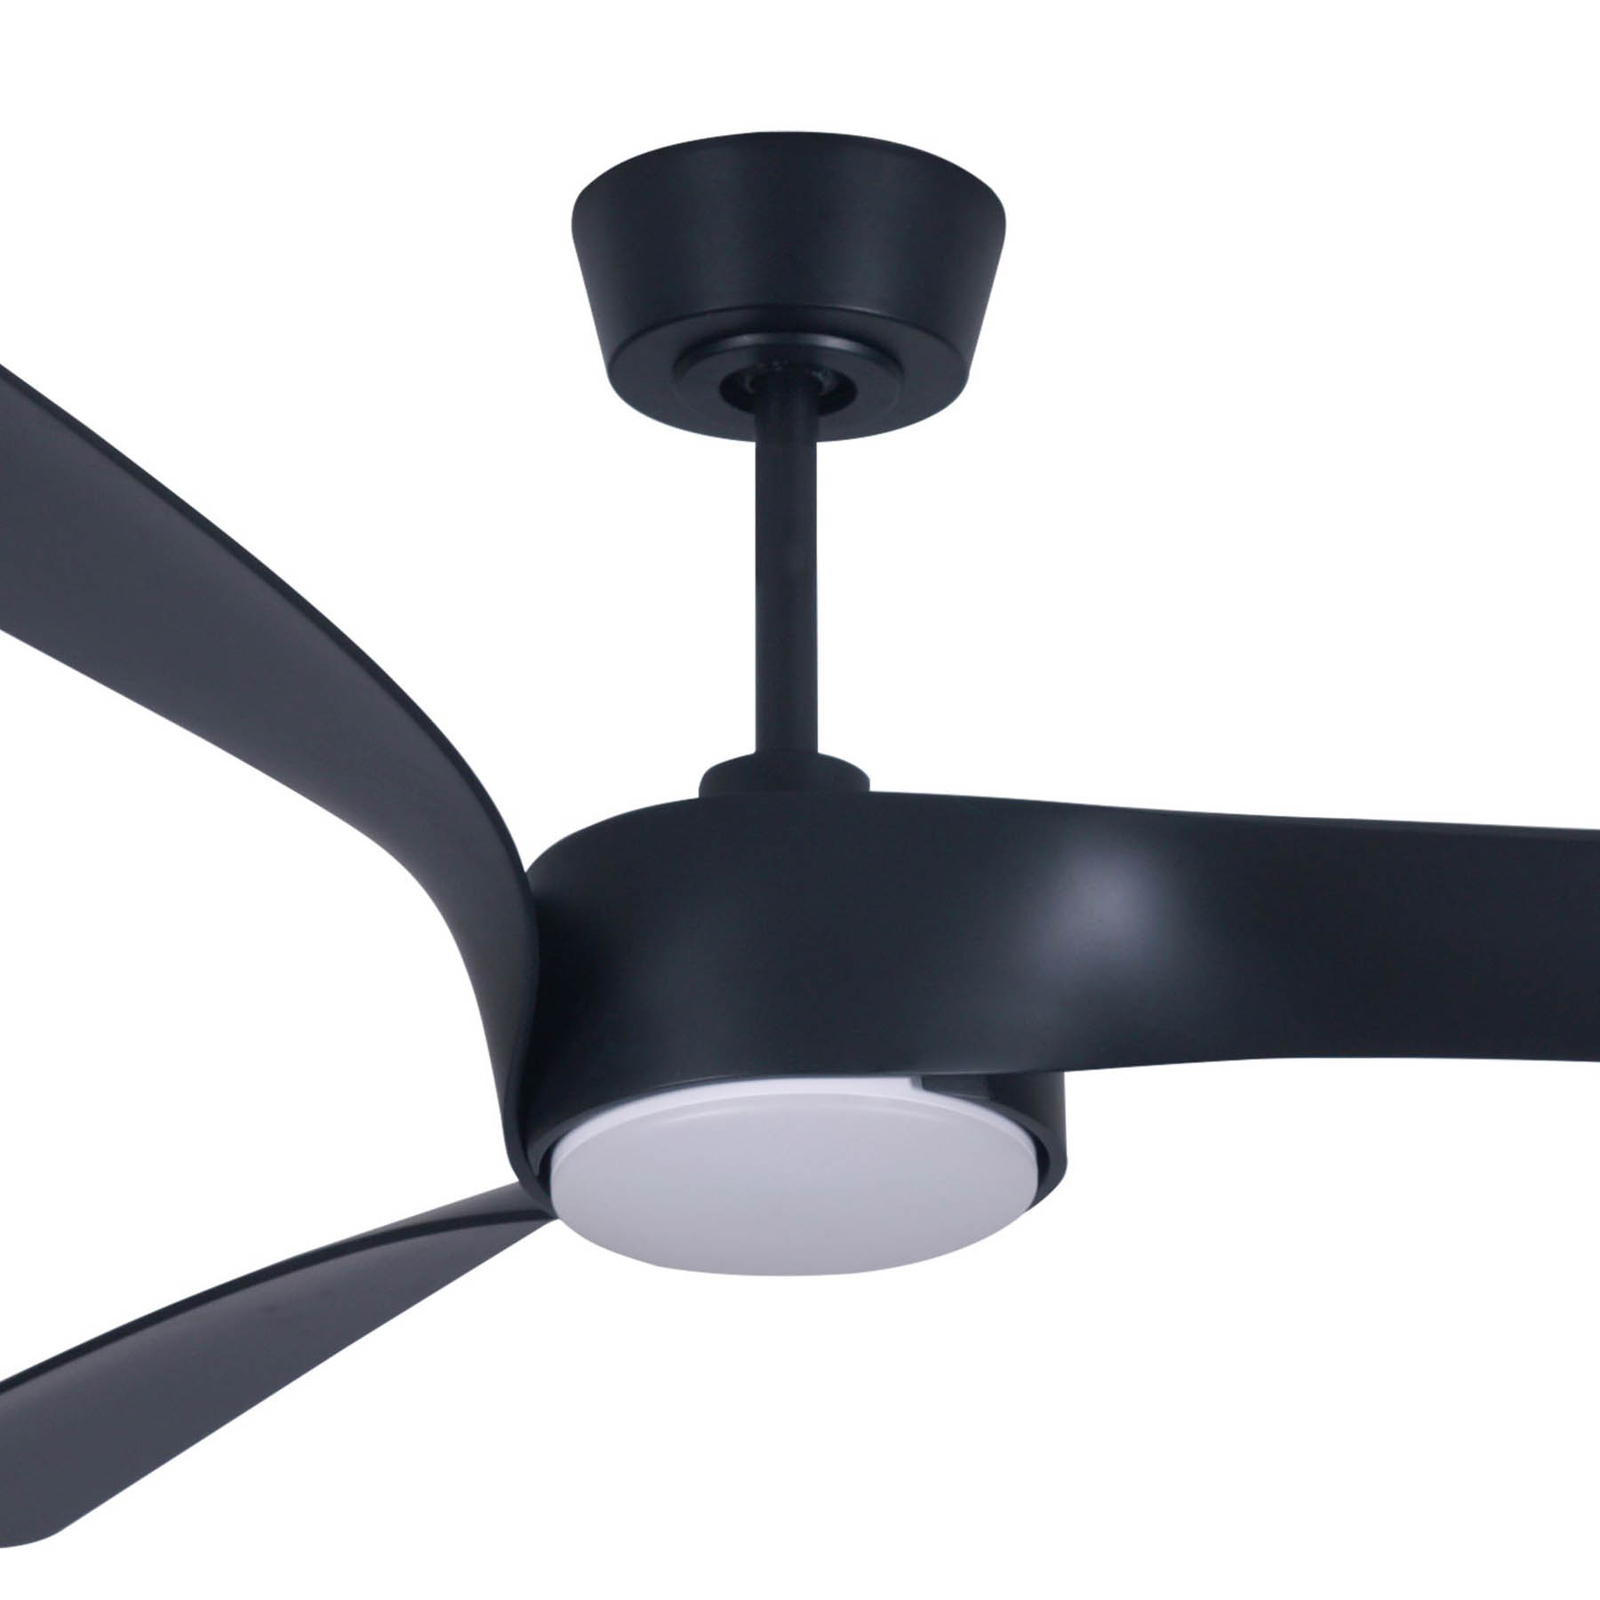 Beacon ceiling fan with light Line black 132 cm quiet